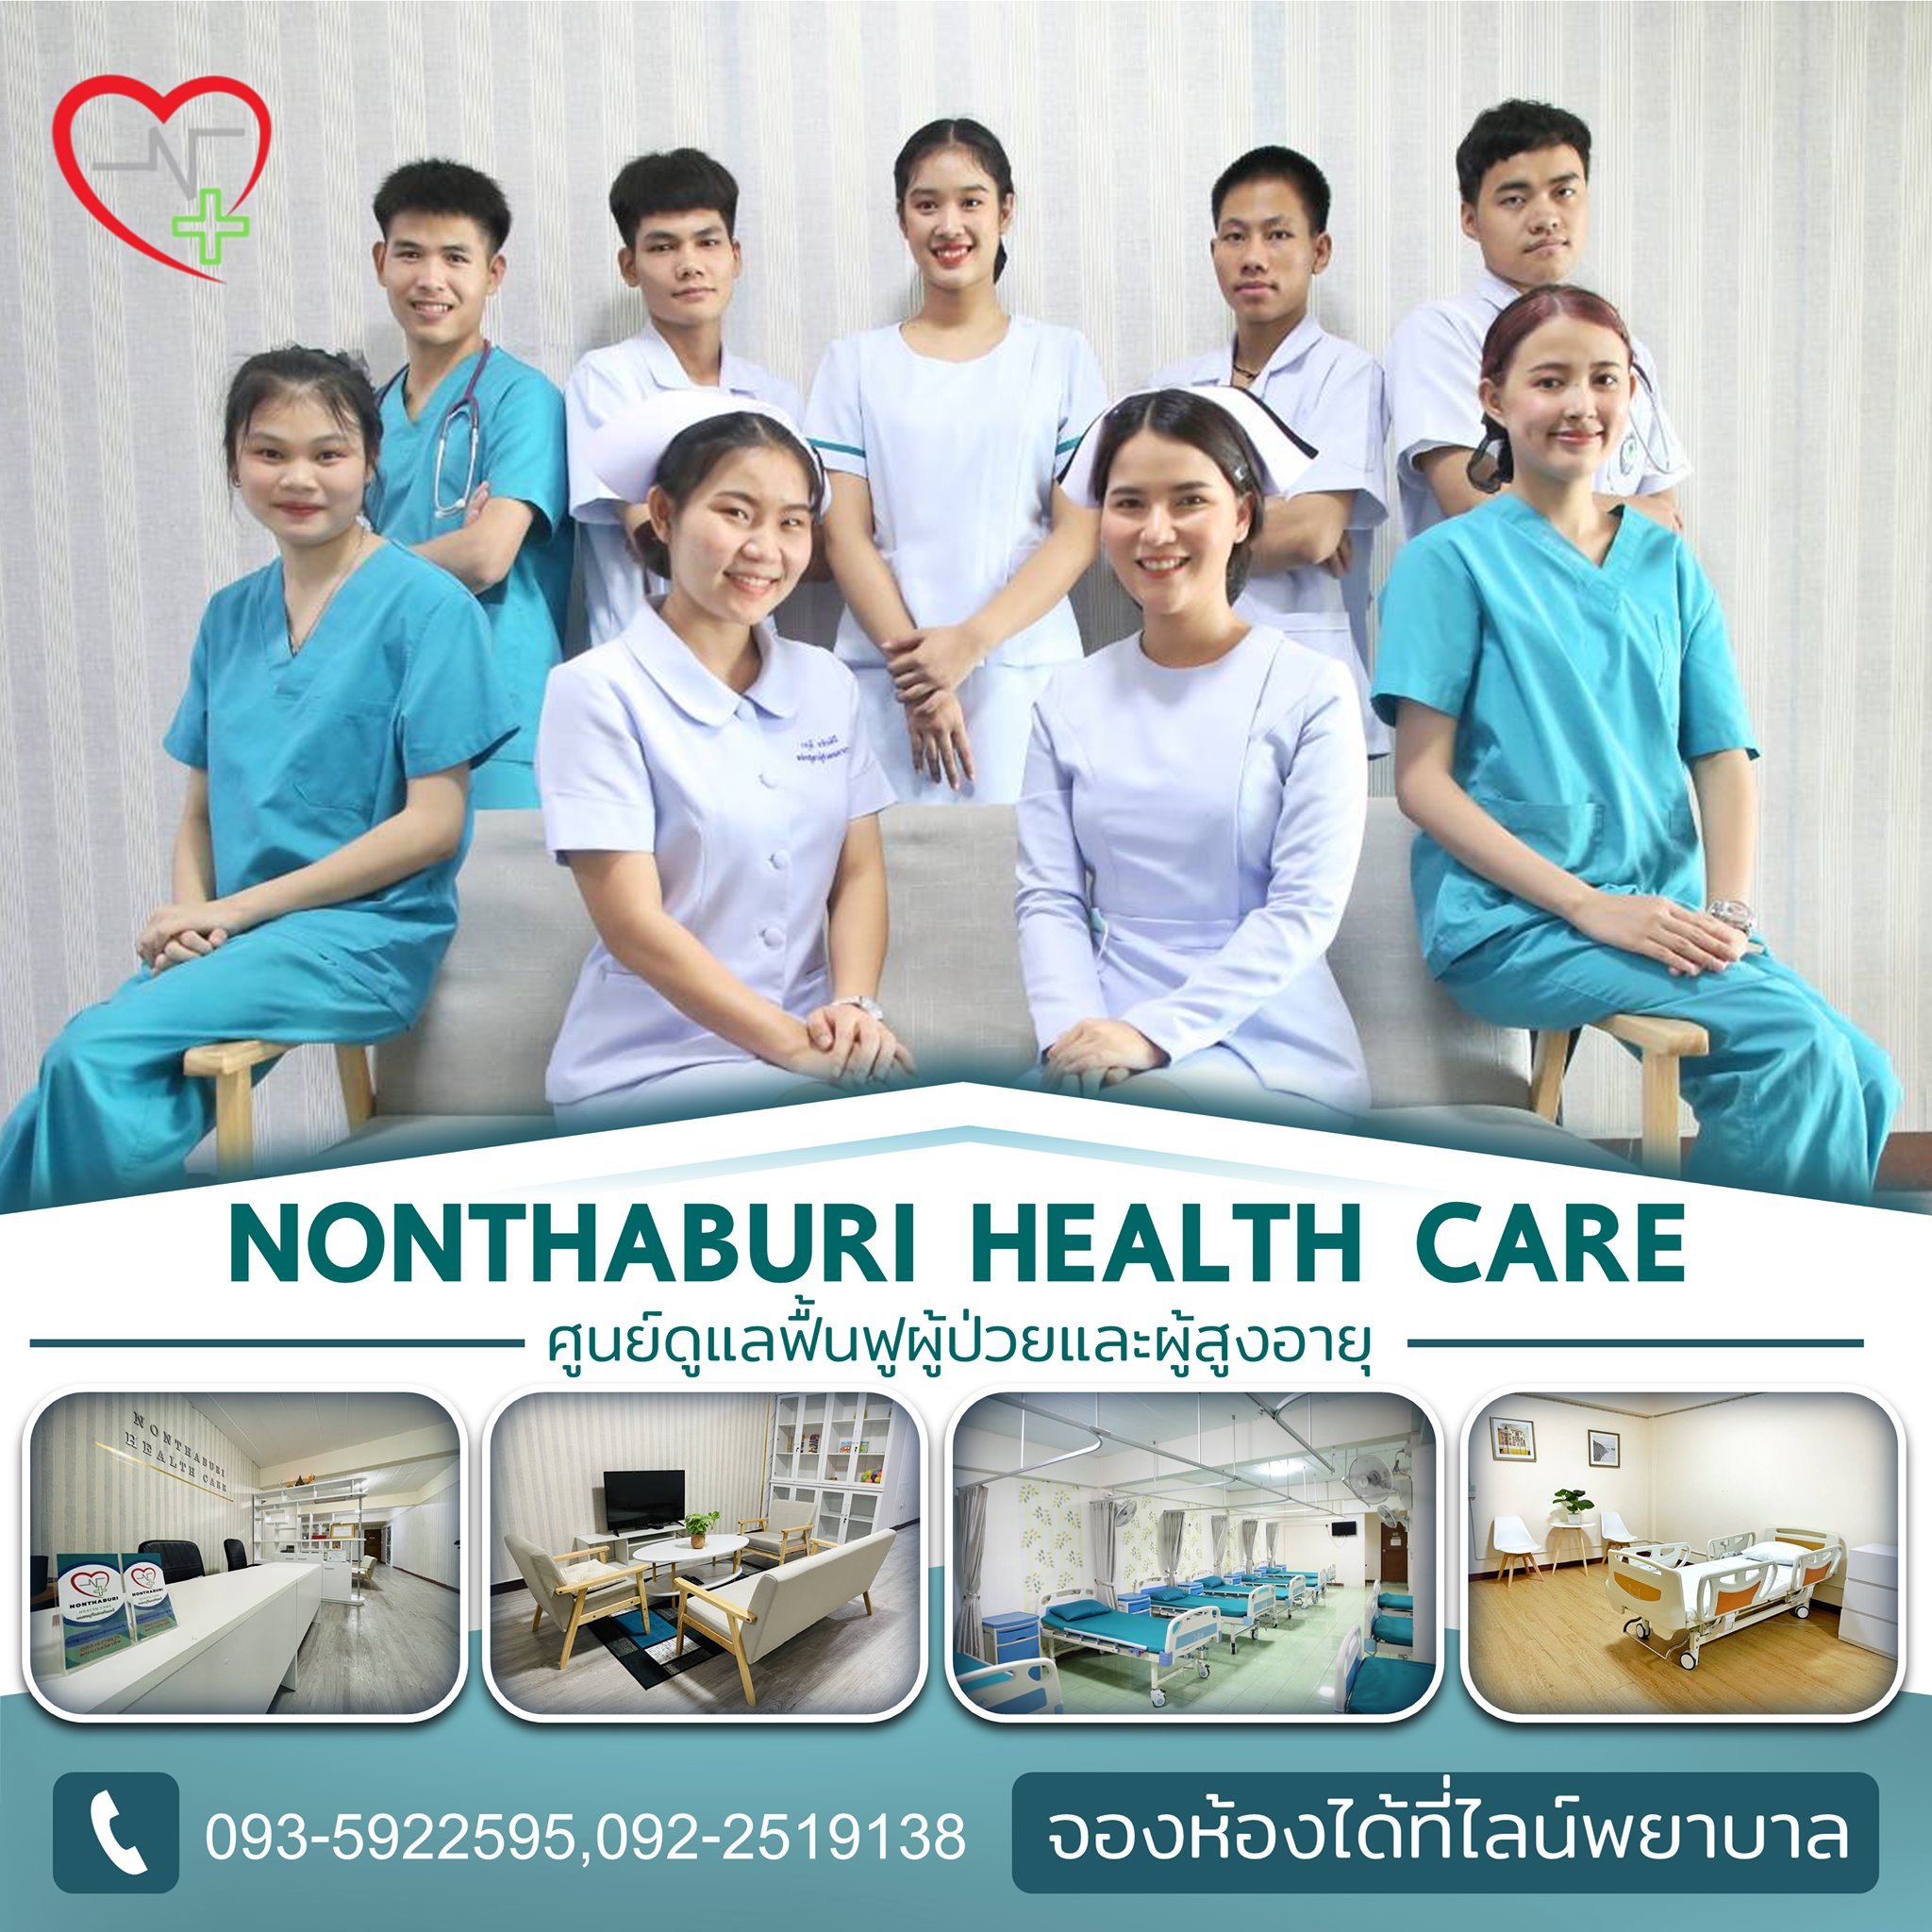 Nonthaburi Health Care กิจวัตรประจำวัน